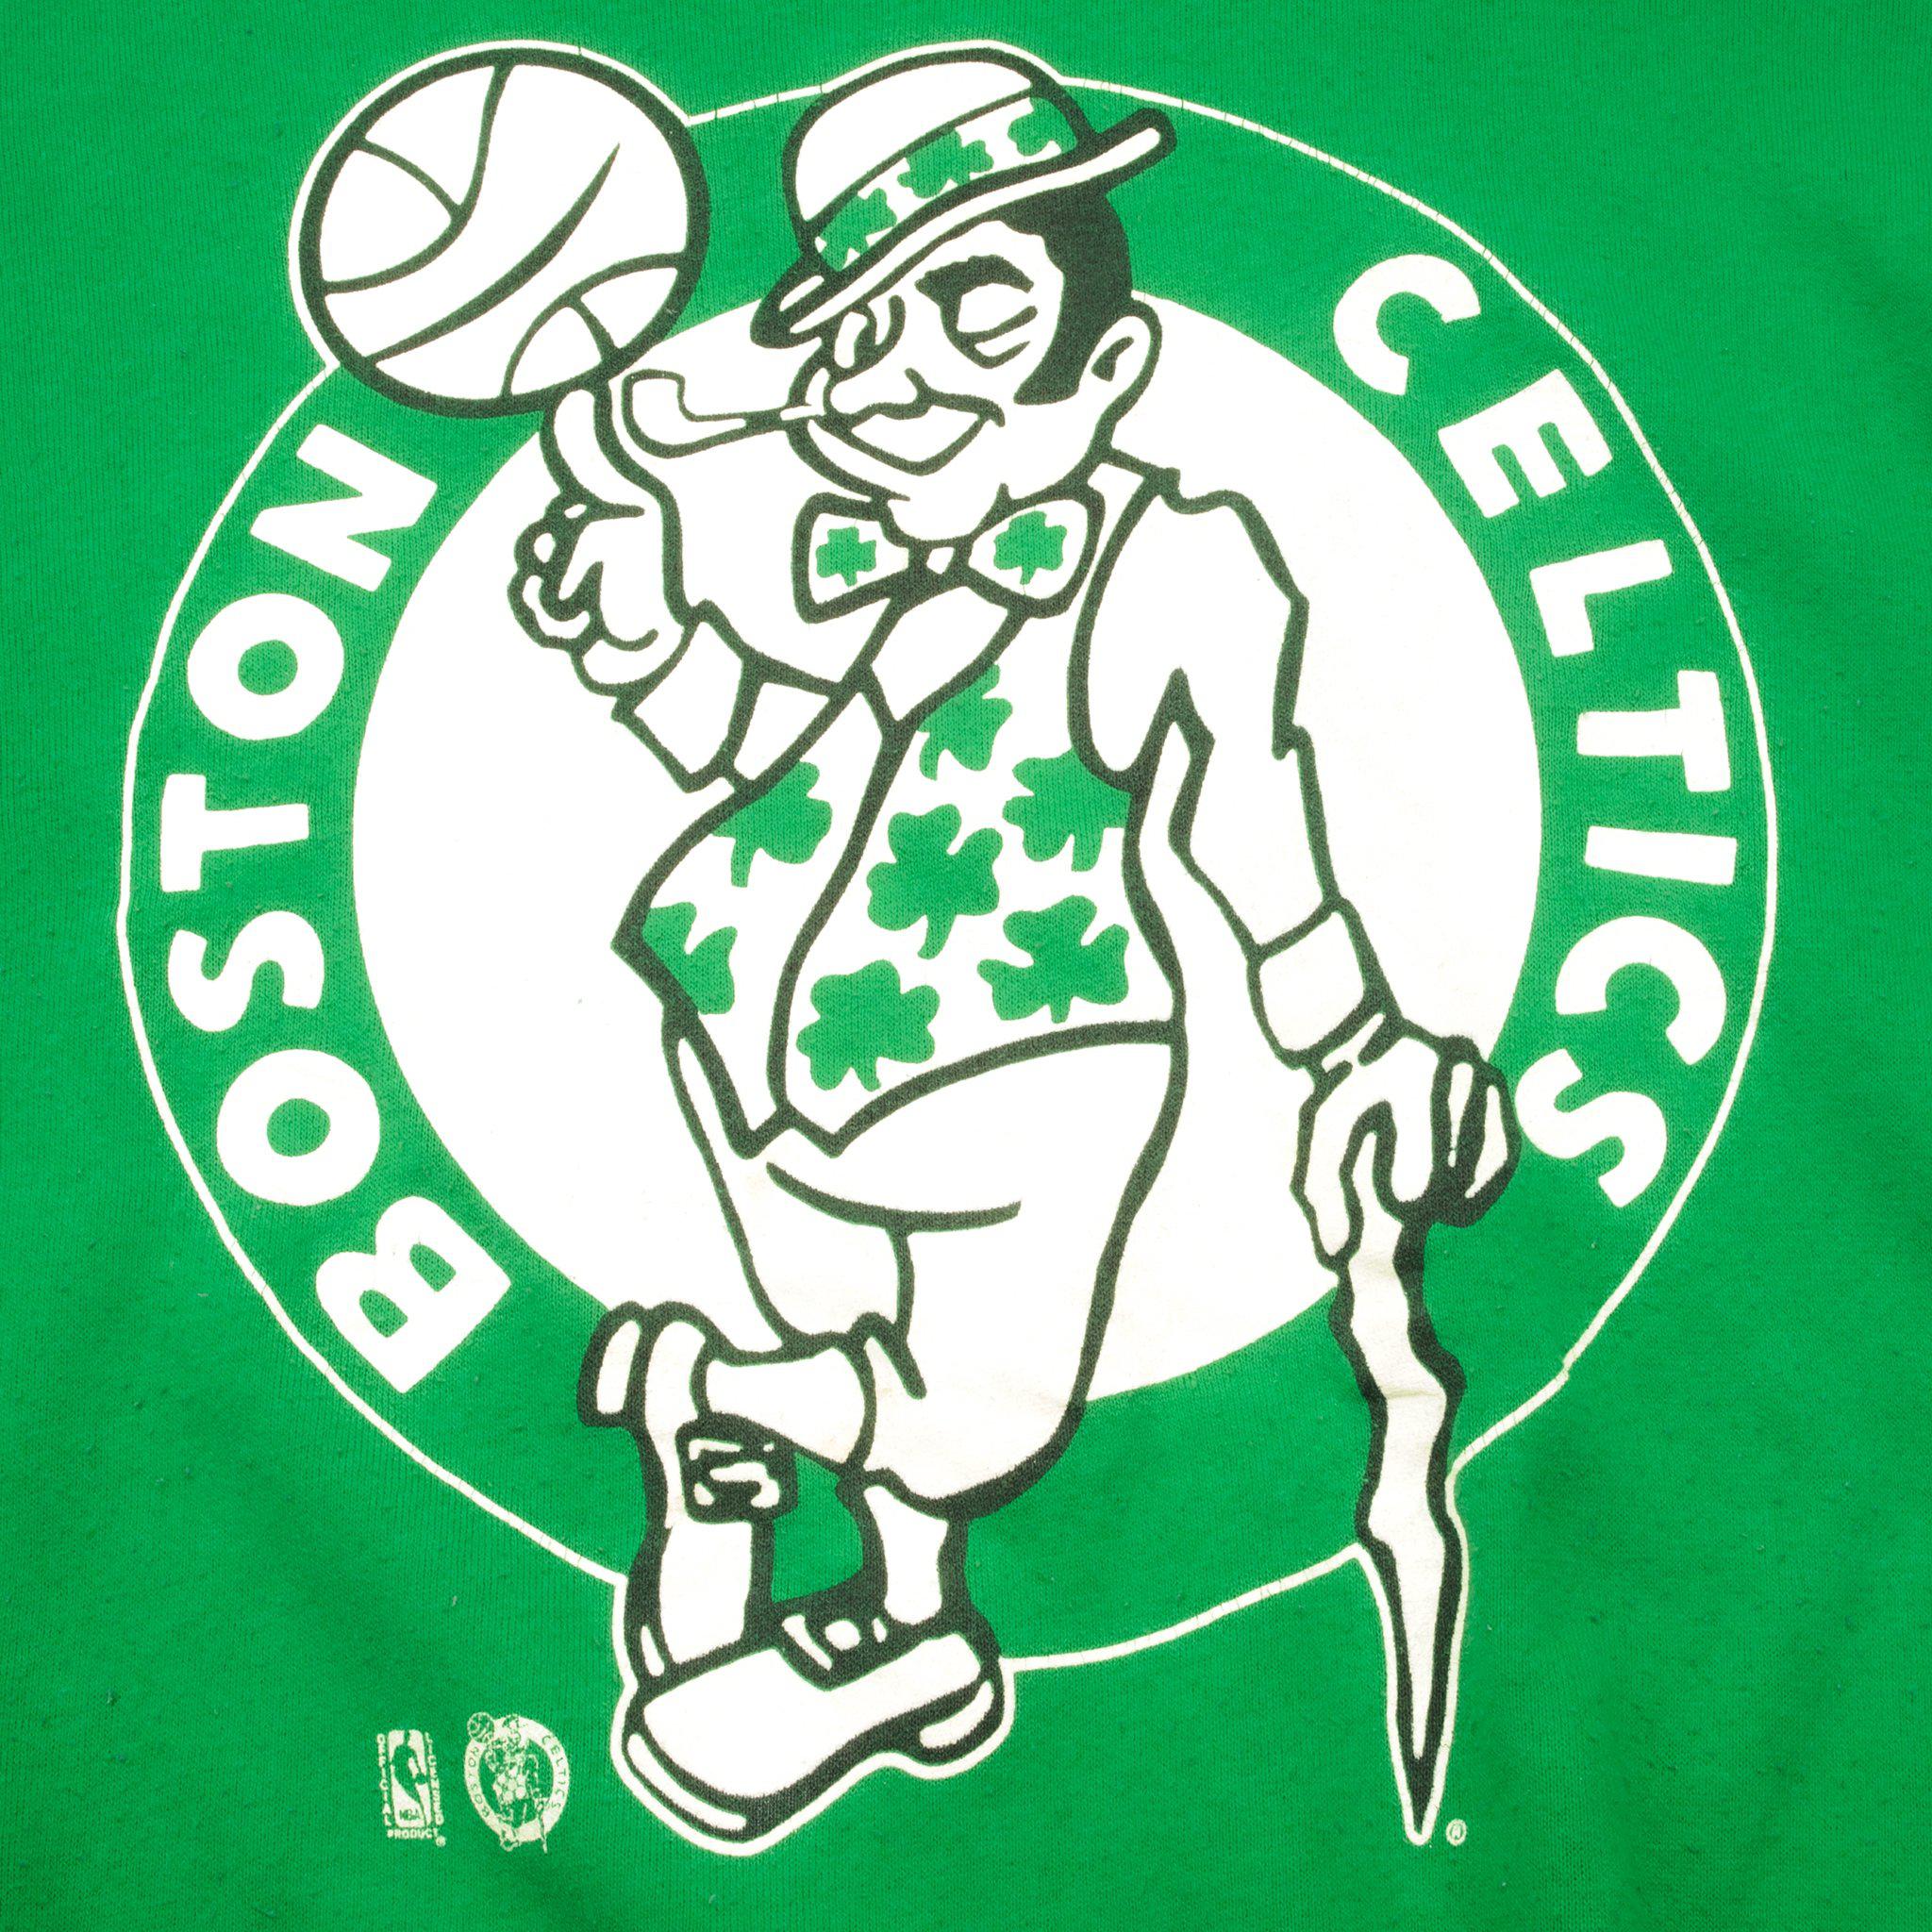 Vintage NBA Boston Celtics EST 1946 Logo All Star Sweatshirt Shirt